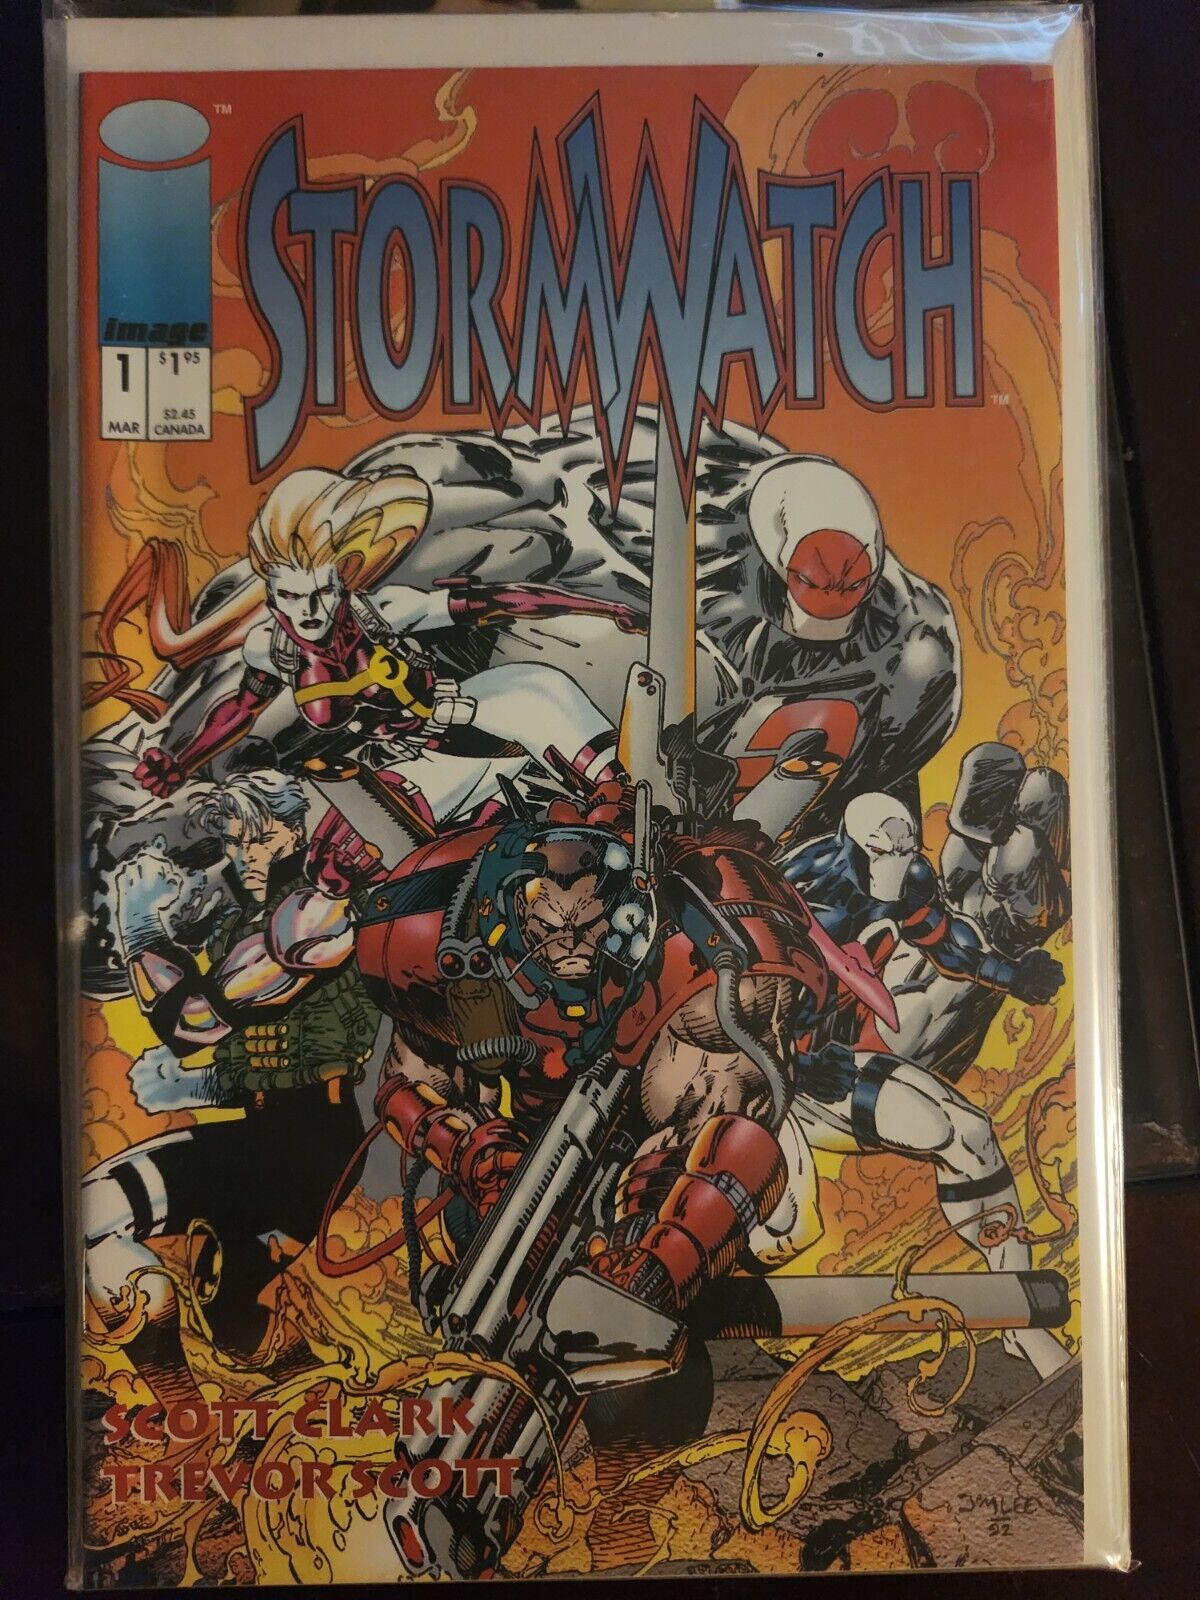 Stormwatch #1 1992 IMAGE COMIC BOOK 9.4 AVG V38-47